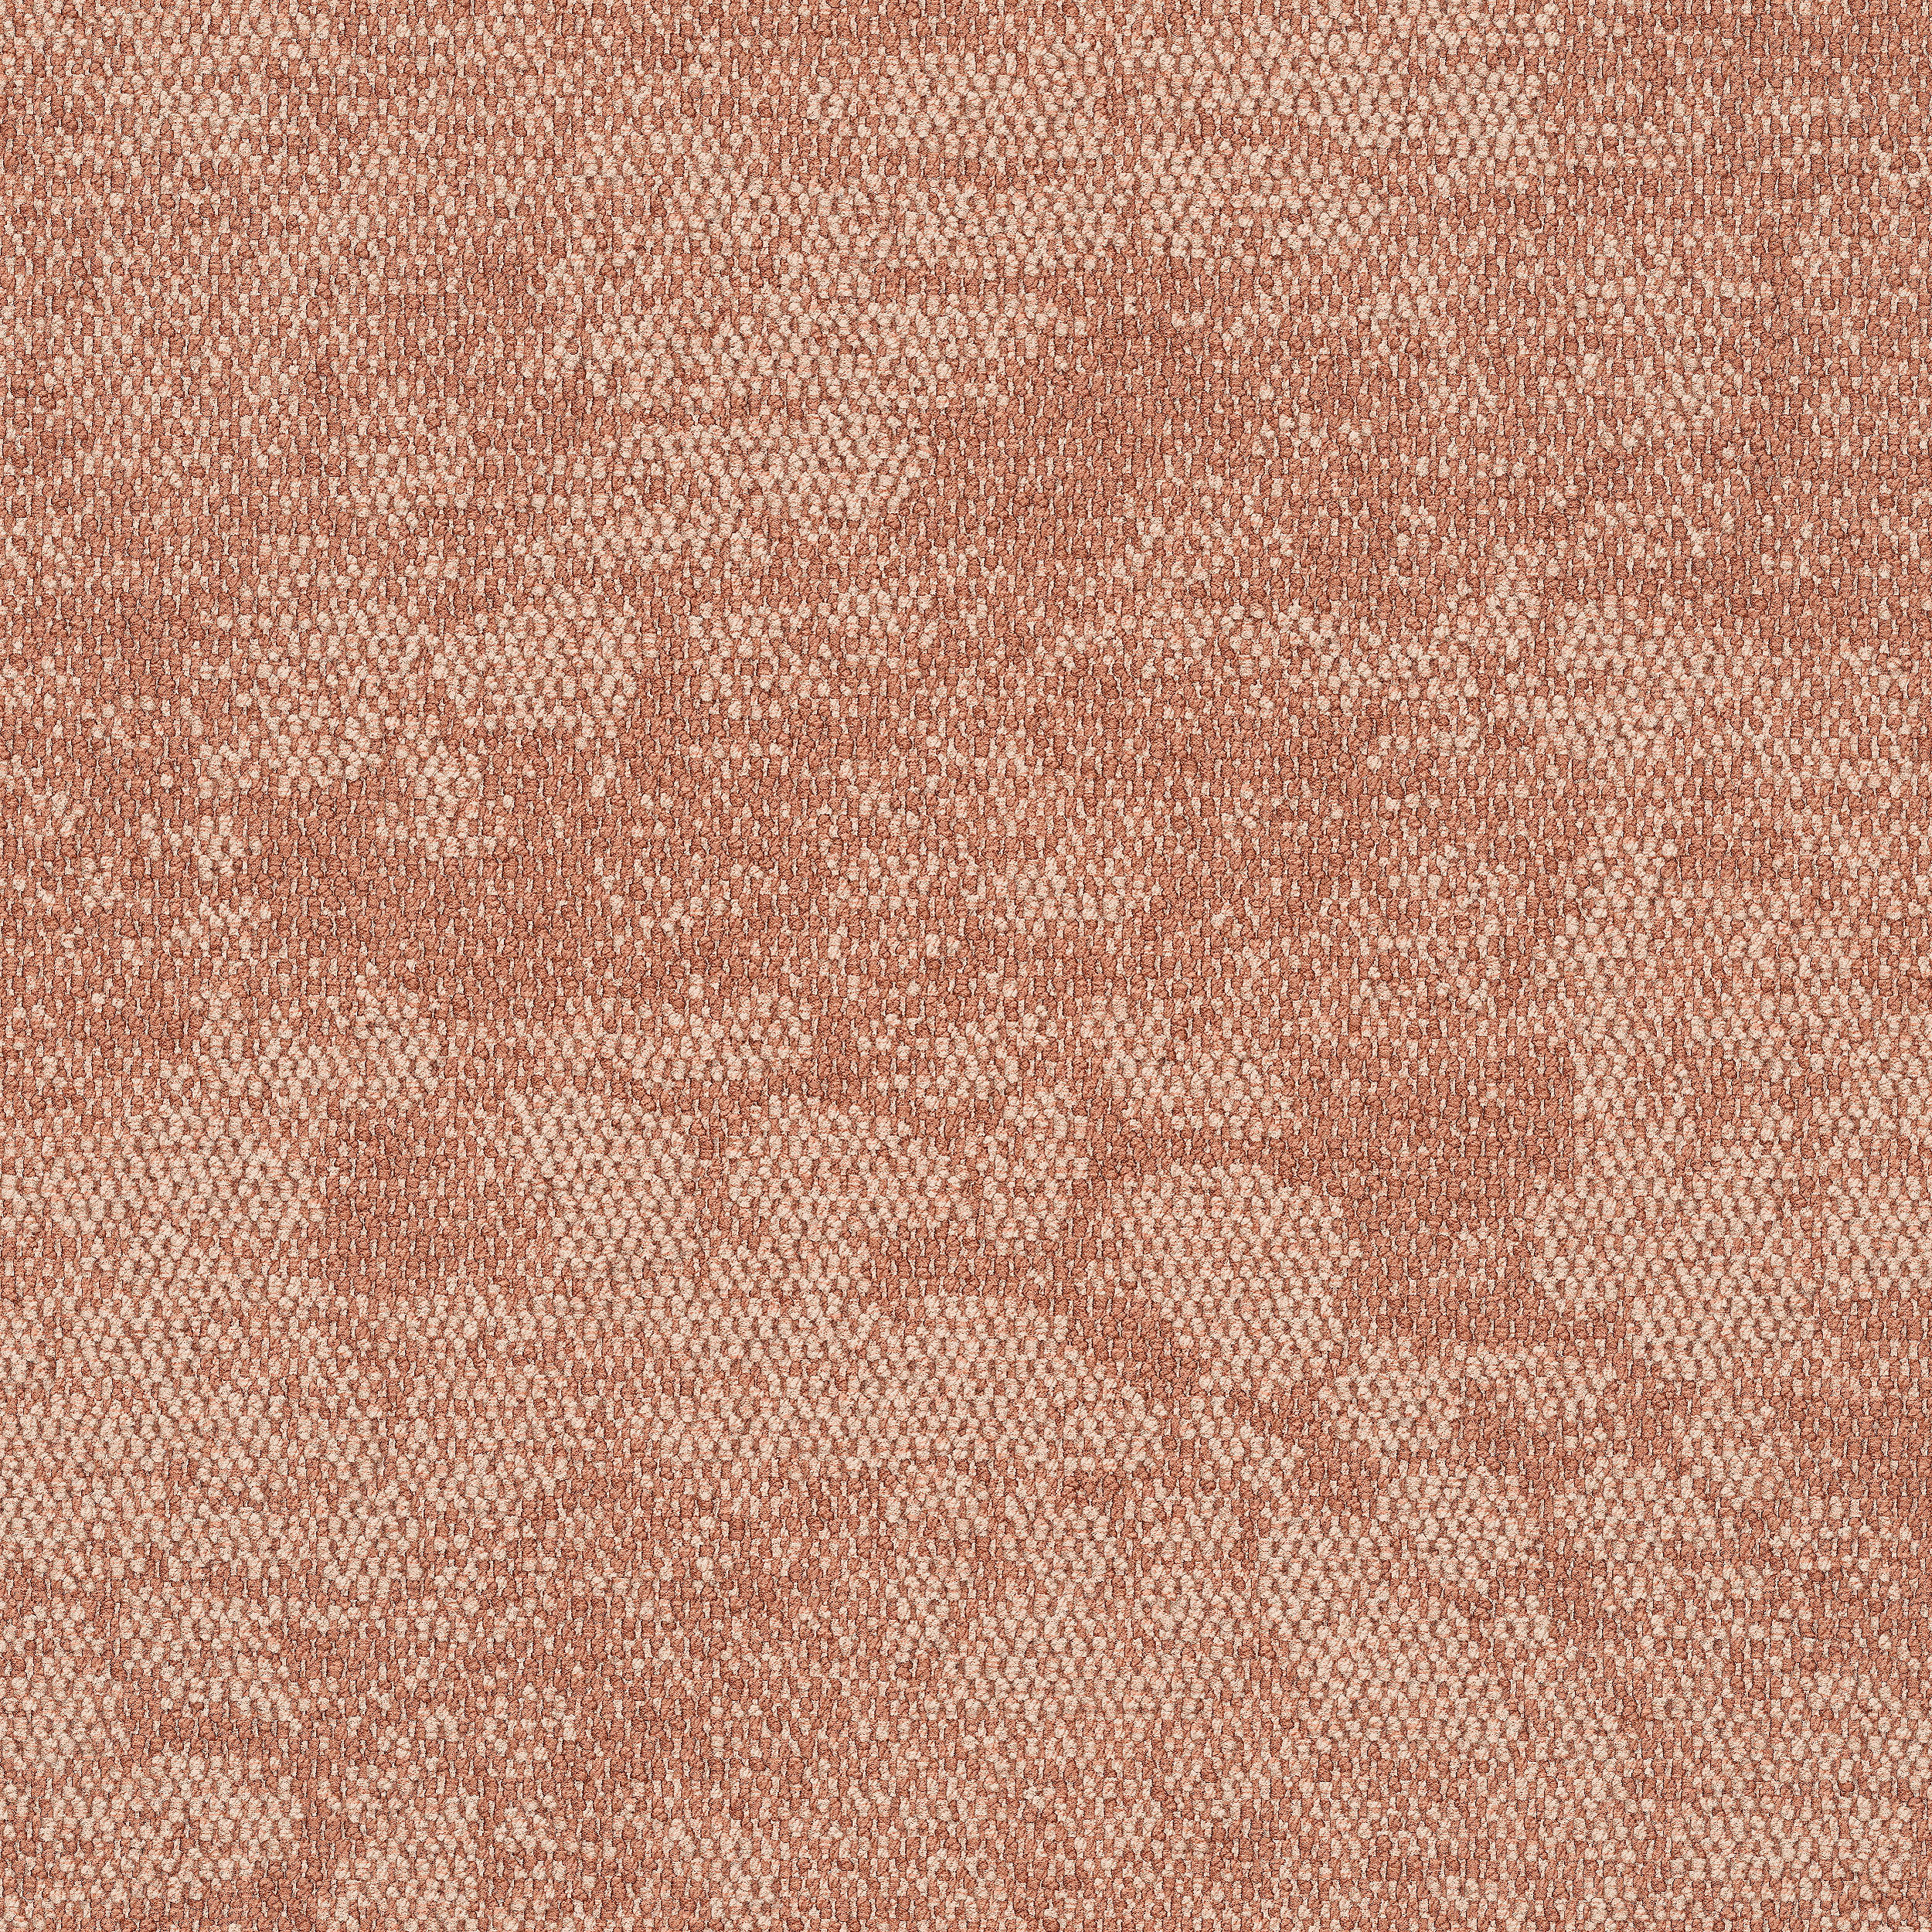 Escarpment carpet tile in Desert Sands image number 12